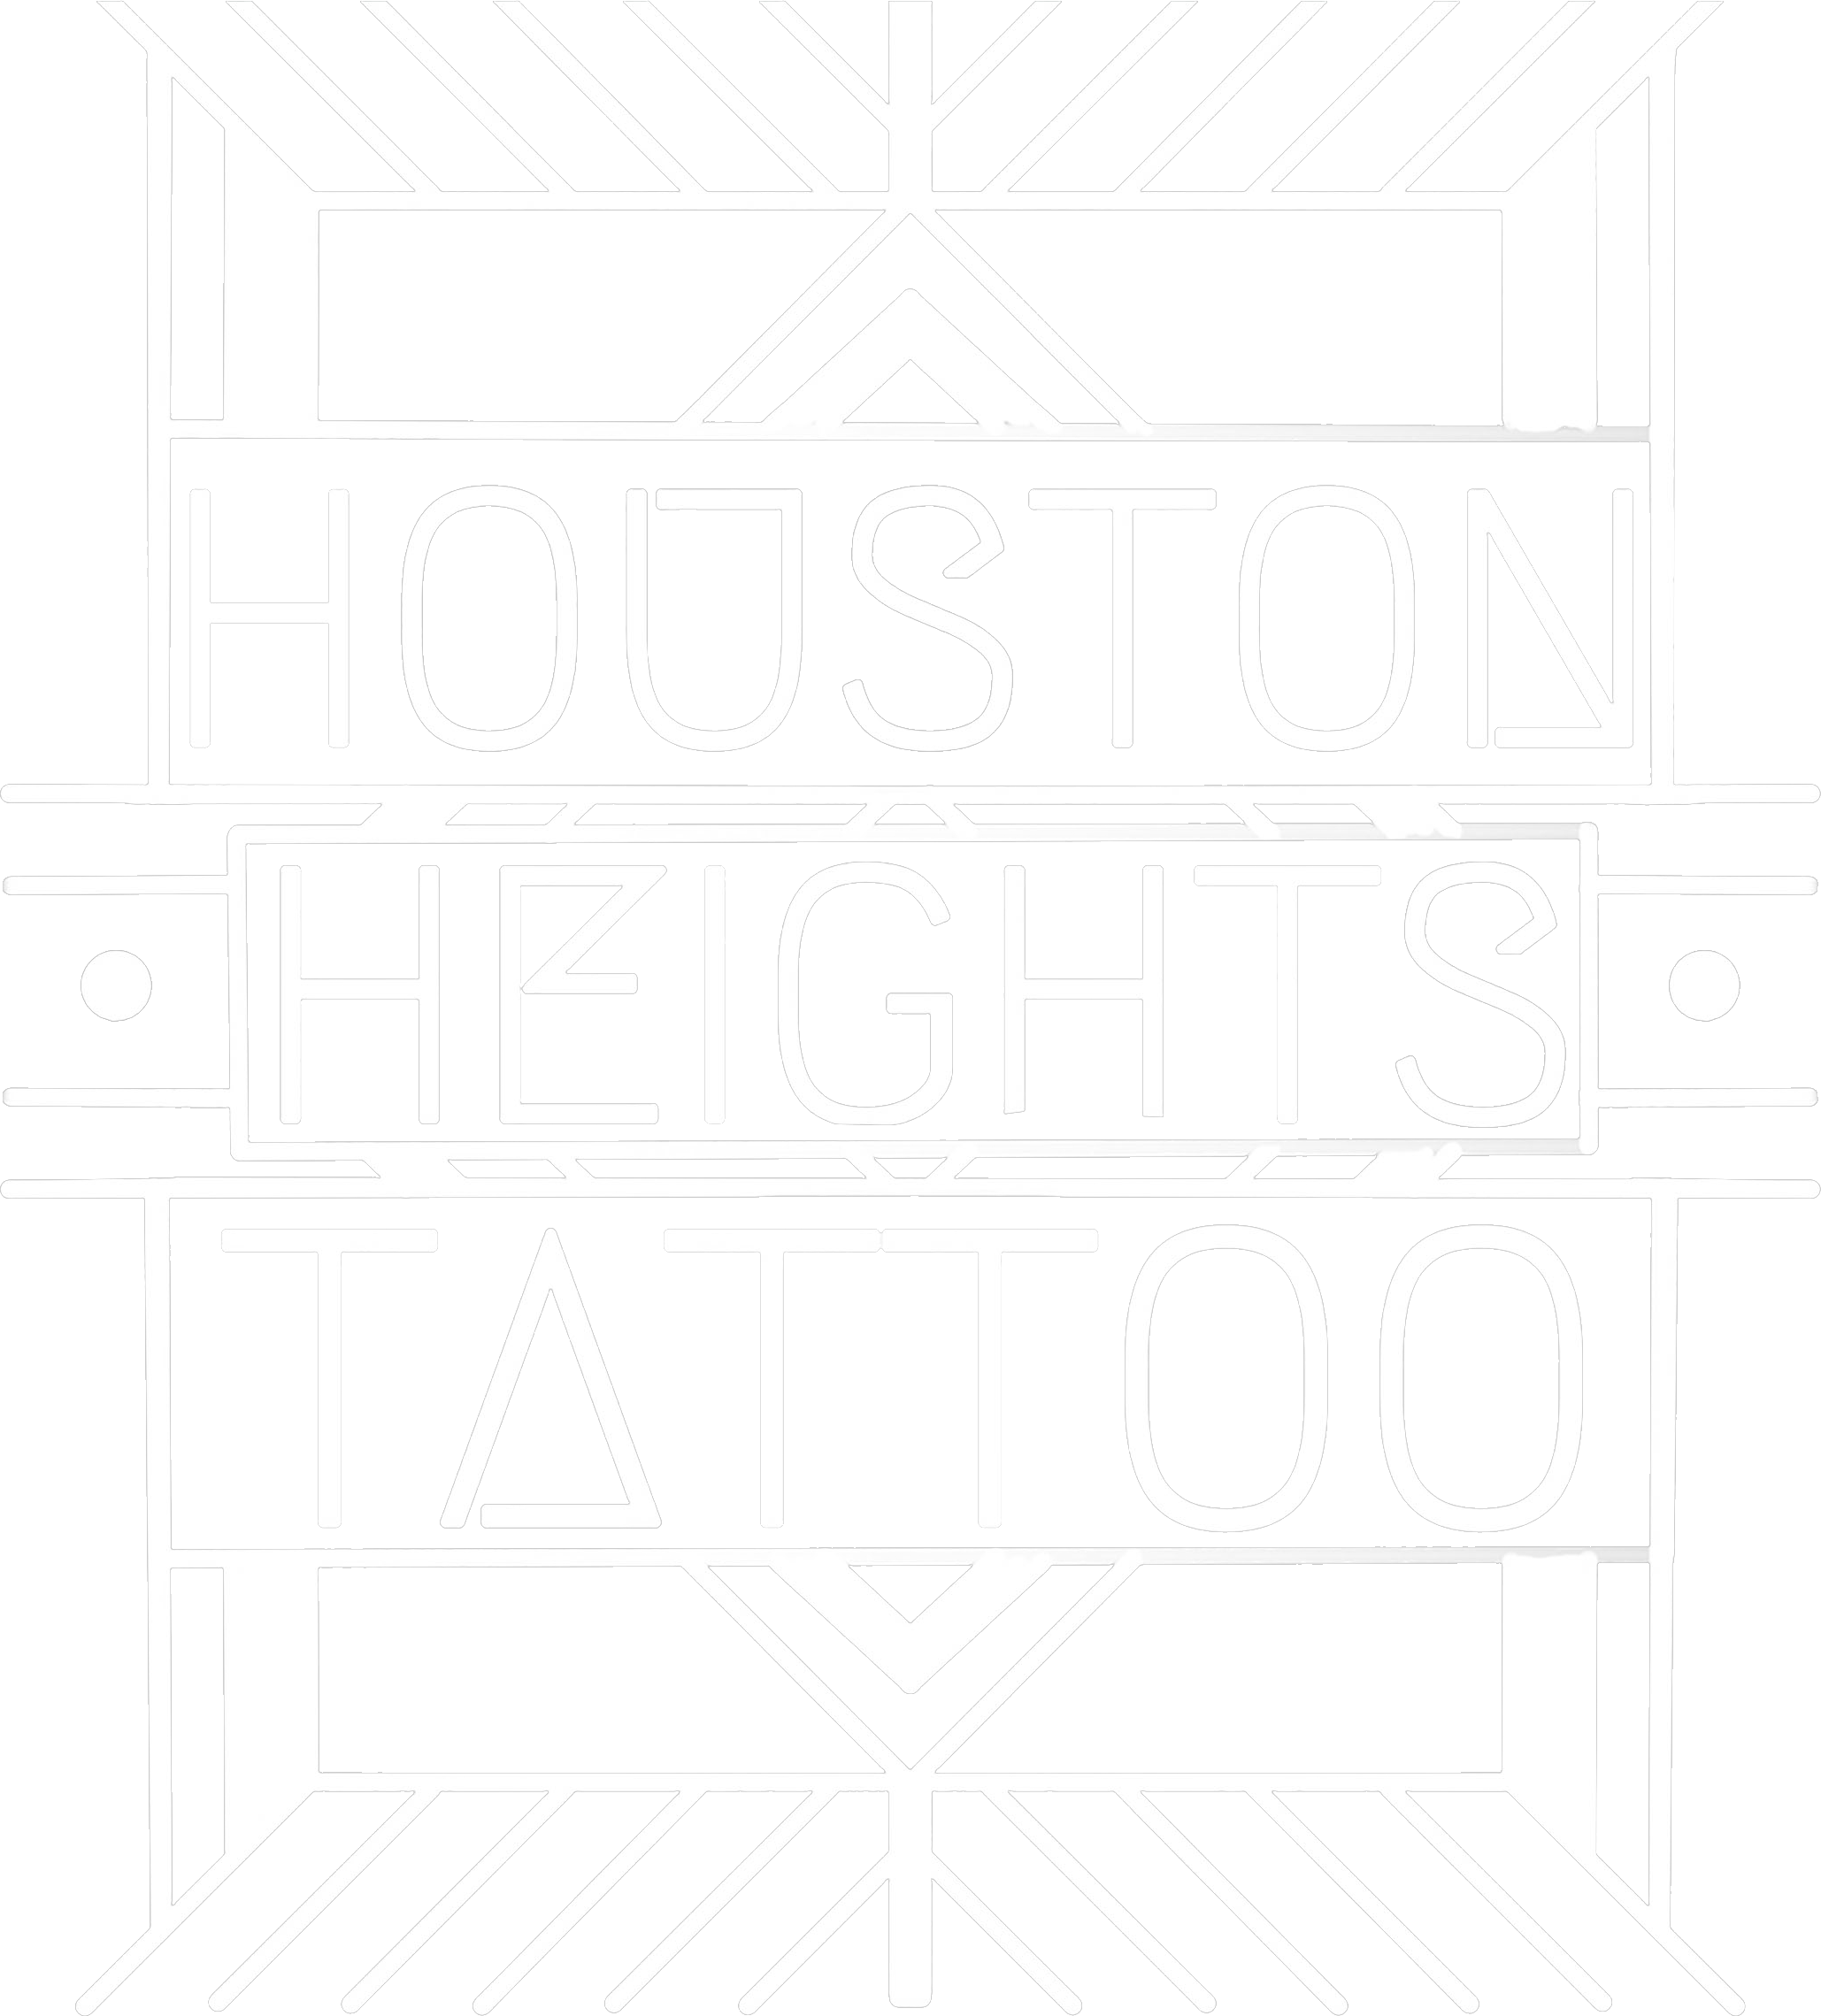 Houston Heights Tattoo houstonheightstattoo  Instagram photos and videos